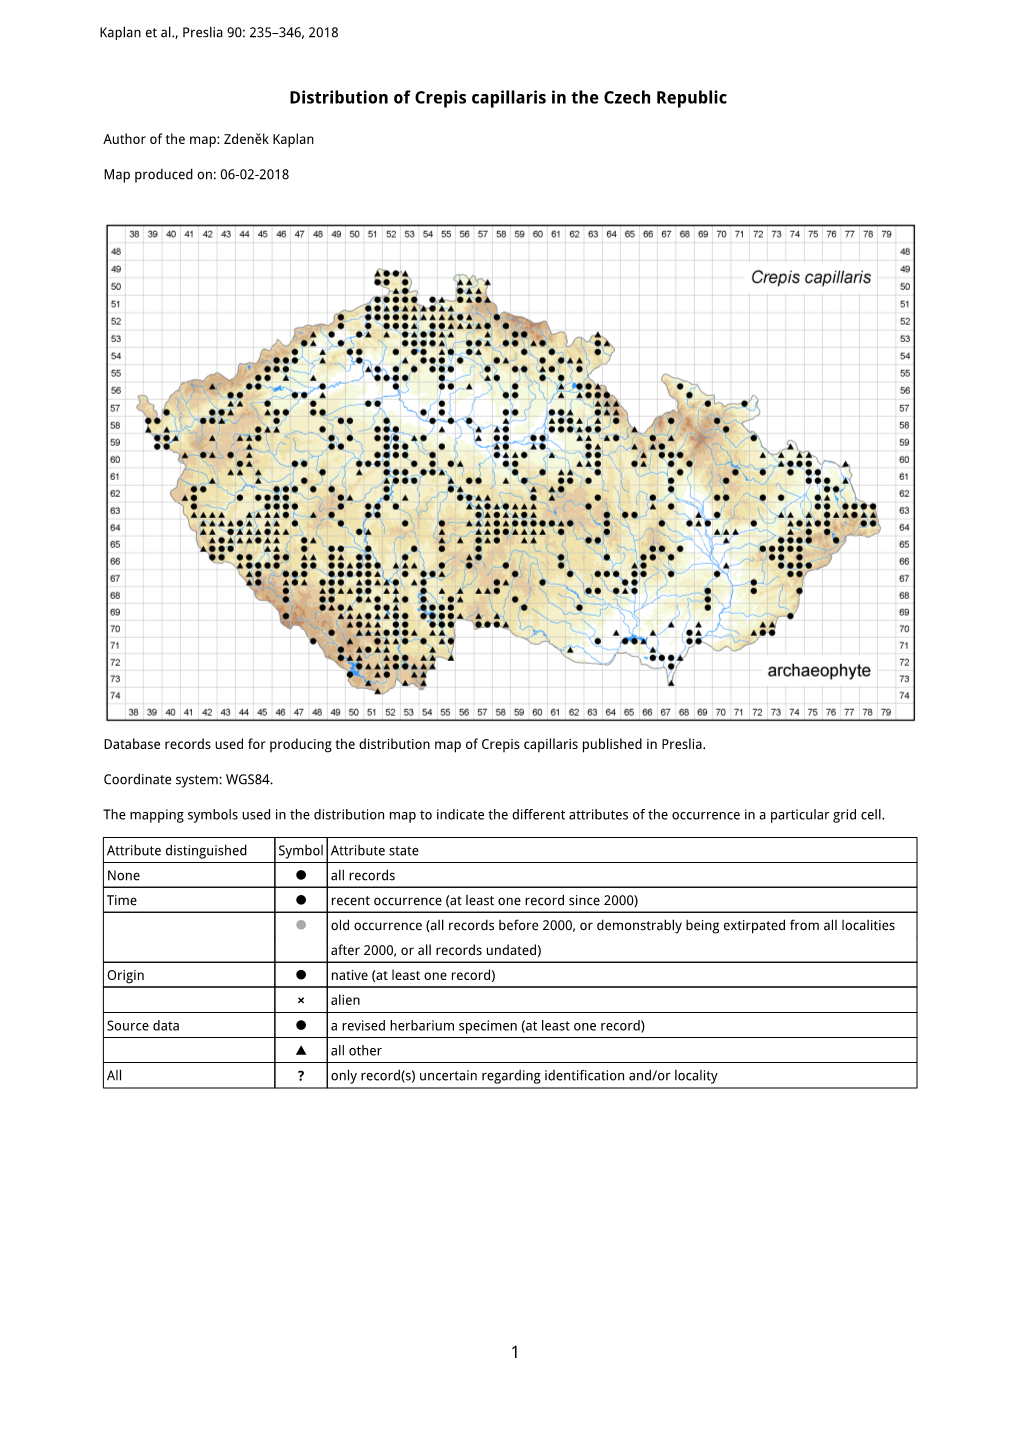 1 Distribution of Crepis Capillaris in the Czech Republic